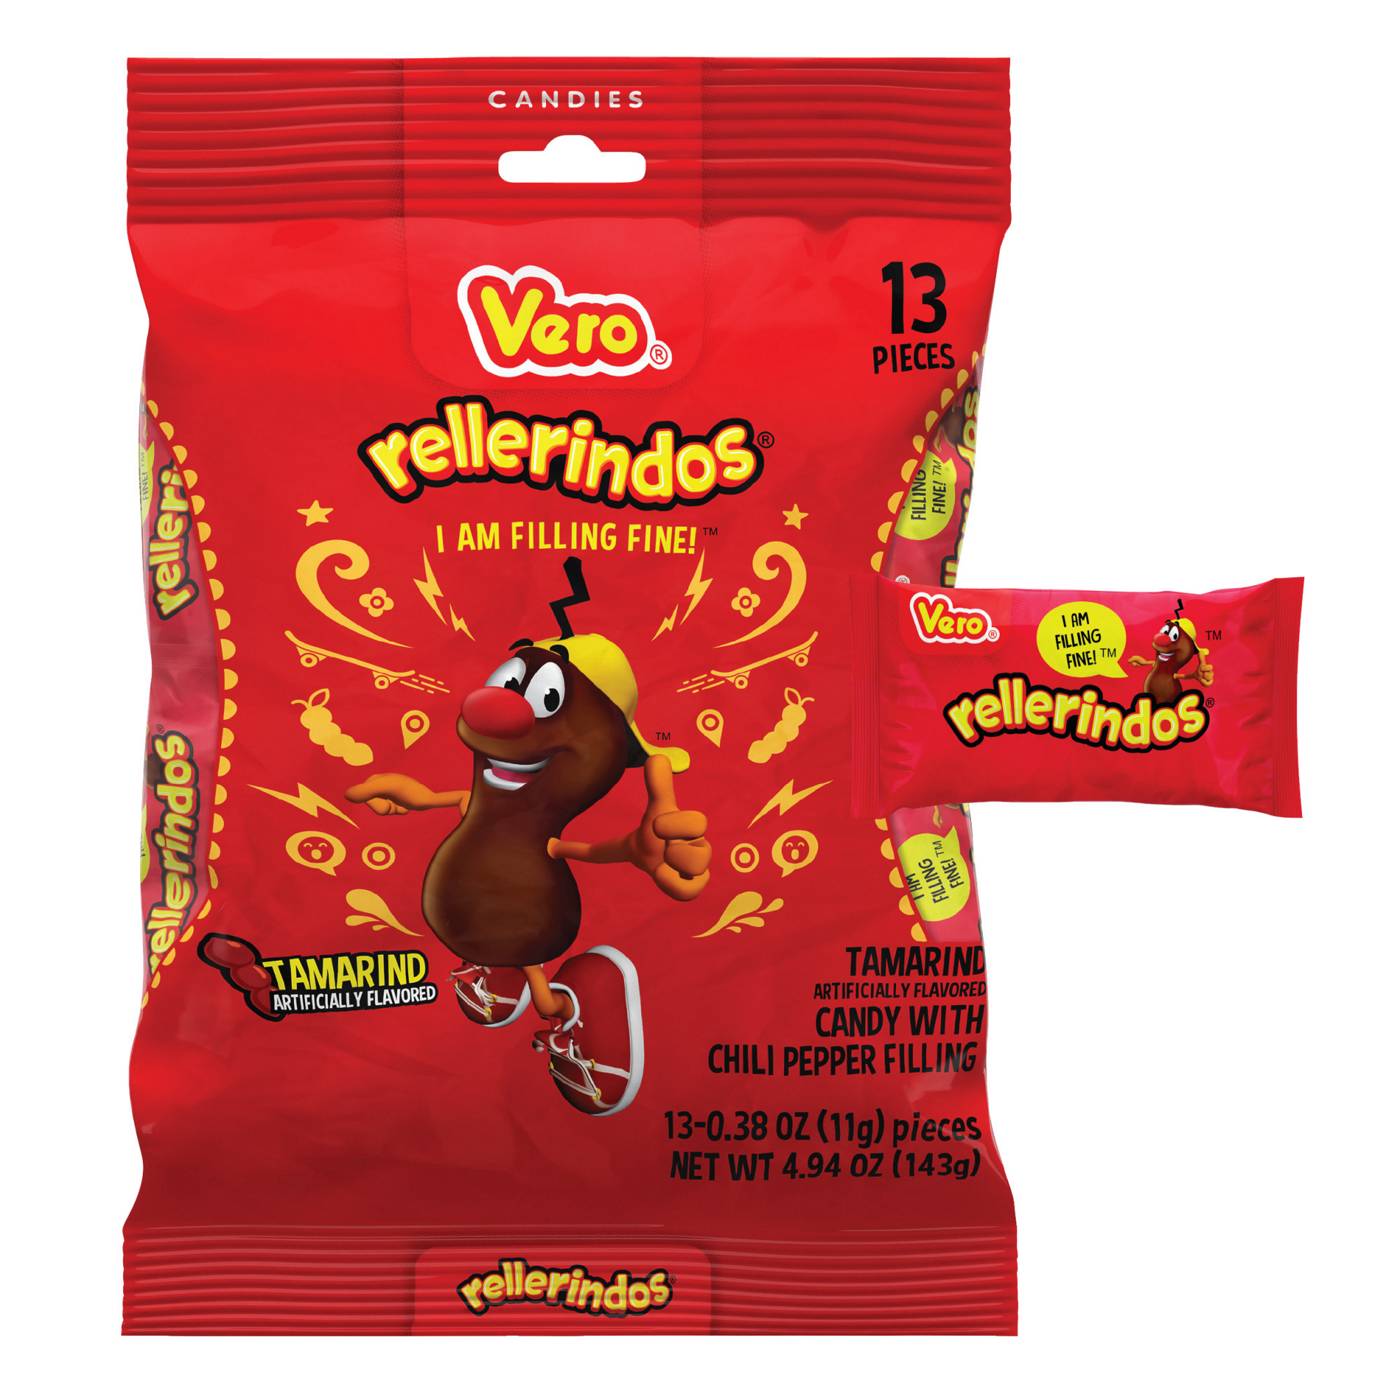 Vero Rellerindos Tamarind Hard Candy; image 1 of 7